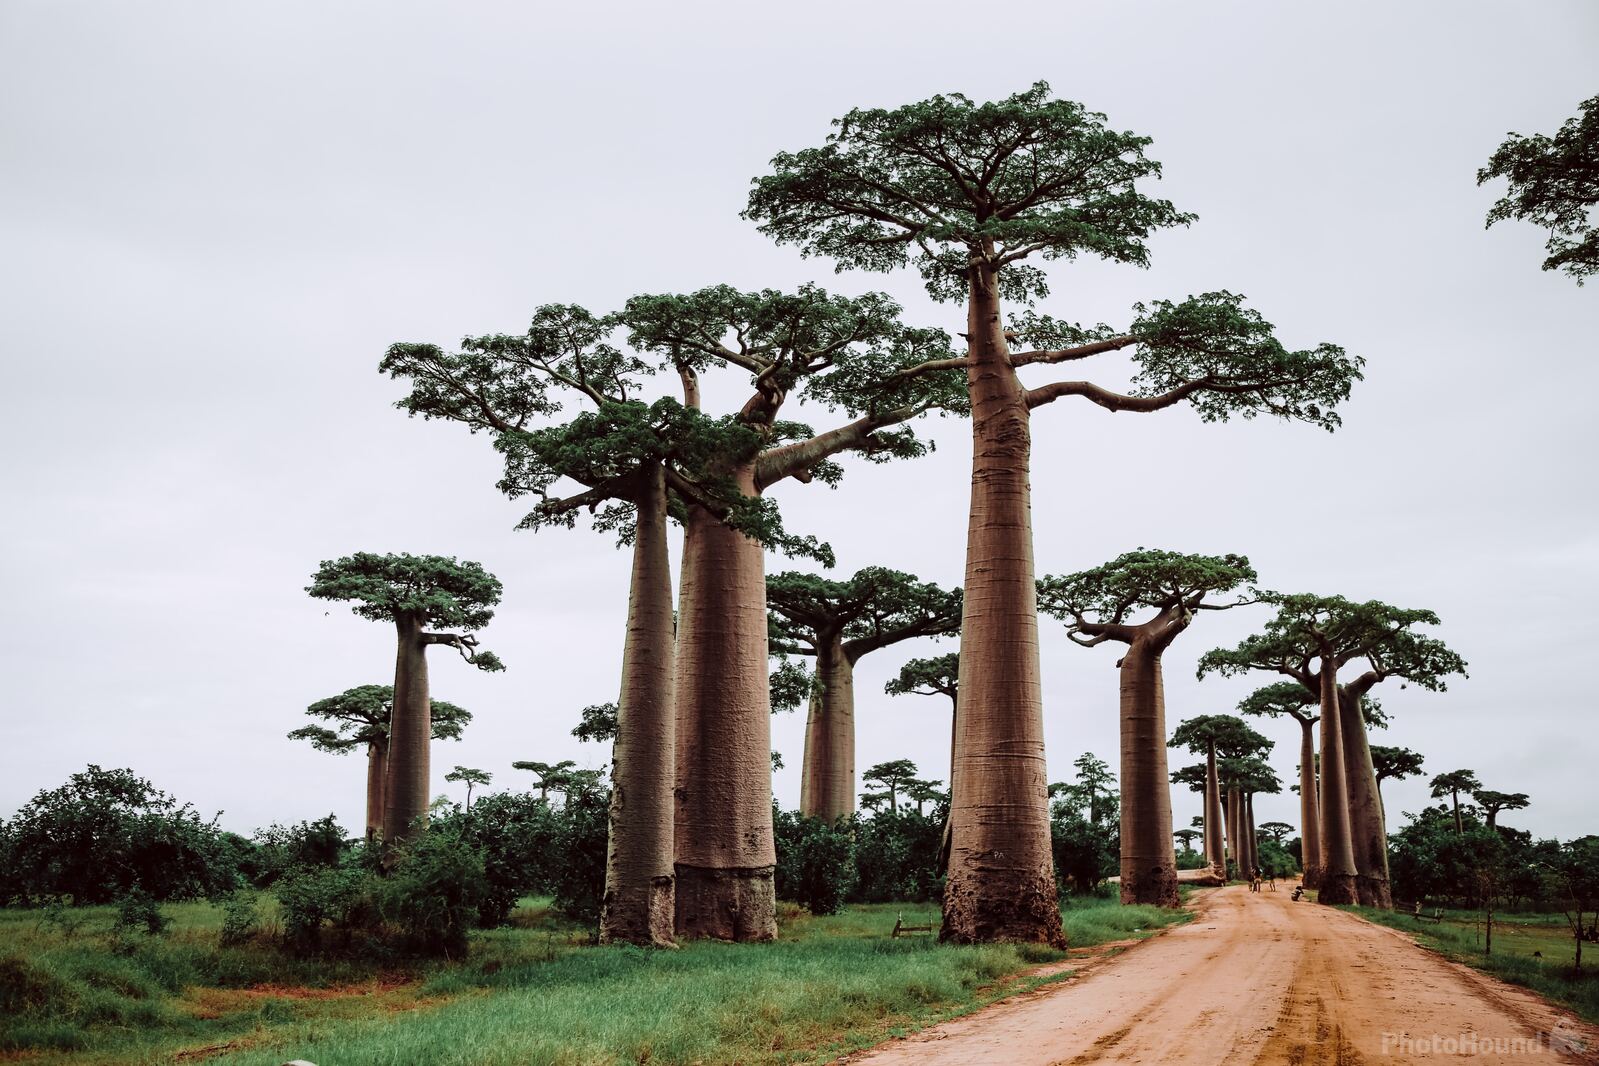 Madagascar photo locations